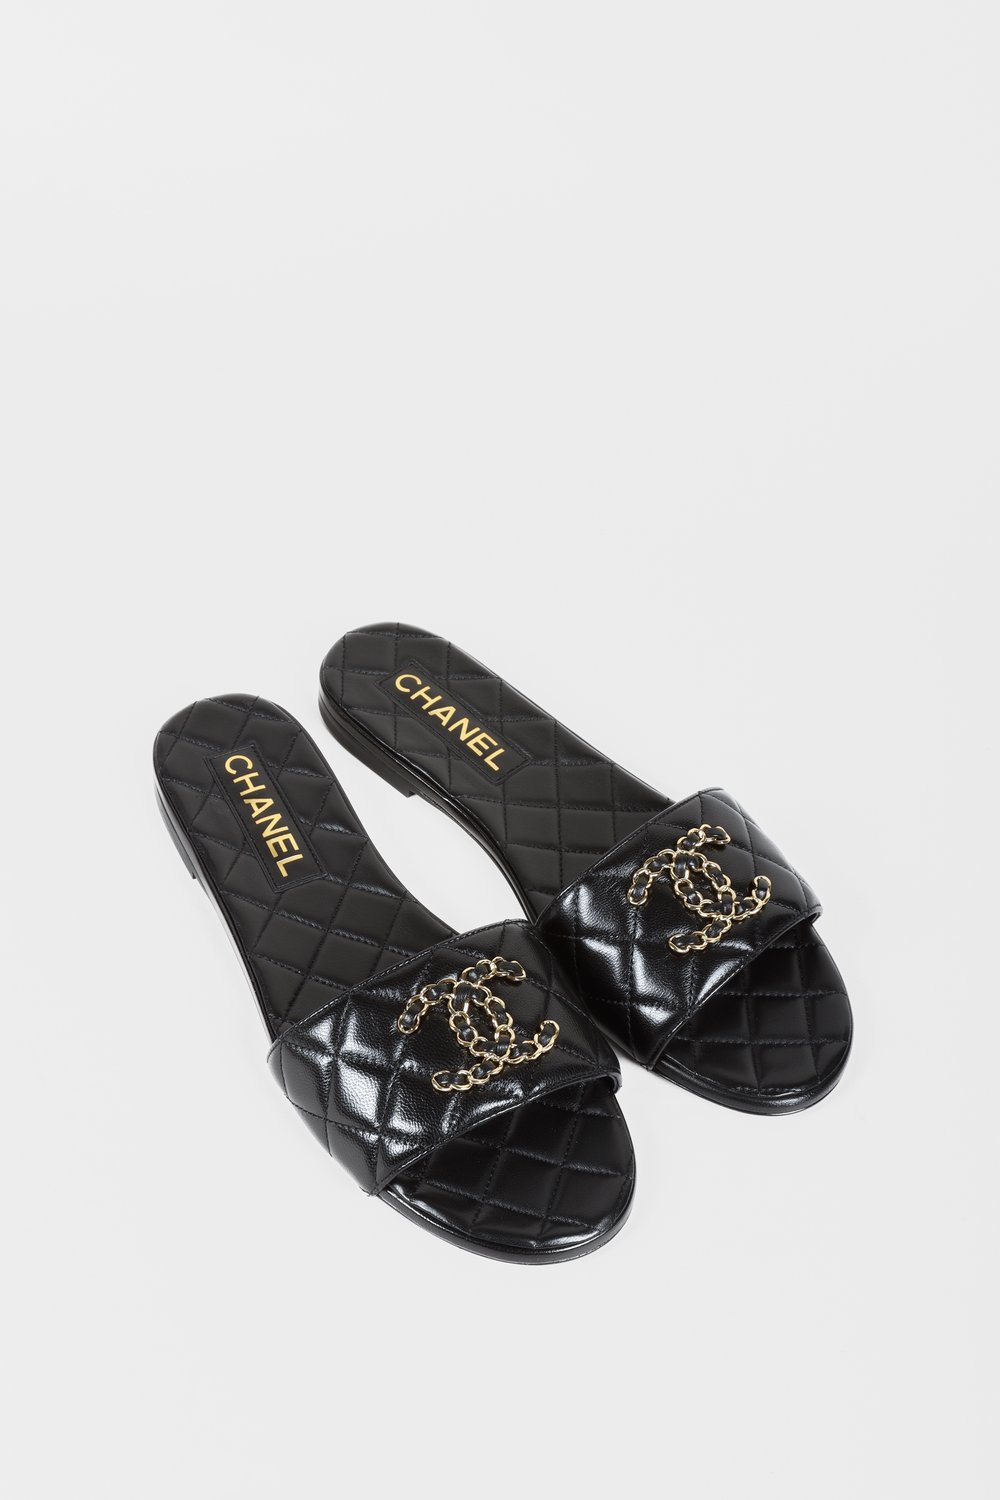 Chanel Black Leather CC Logo Mules Size 39 Chanel | The Luxury Closet